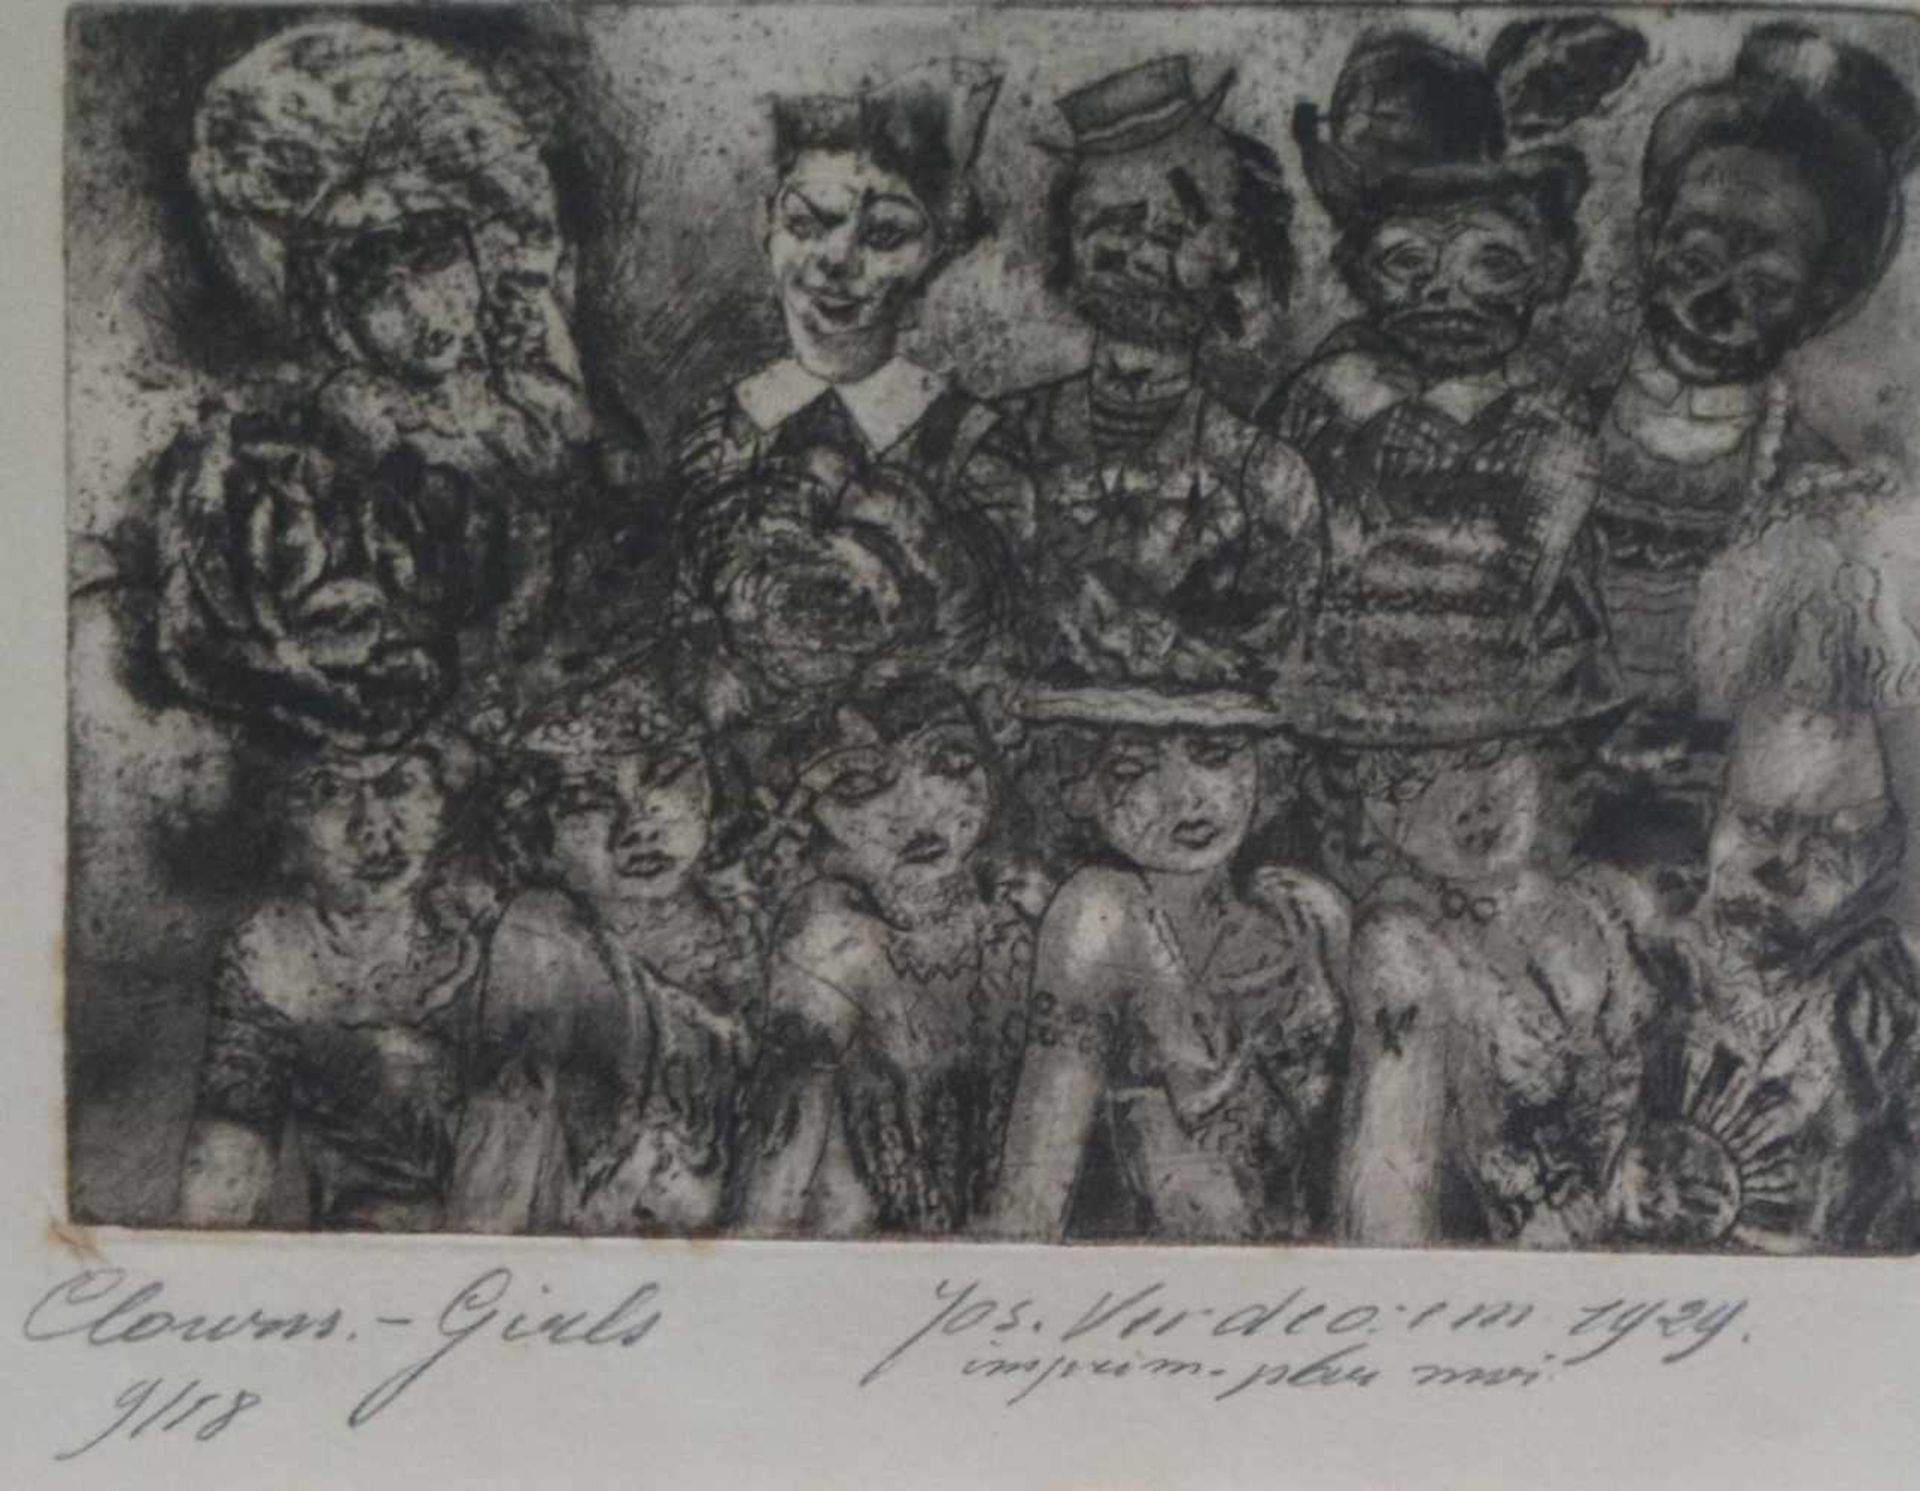 Joseph VERDEGEM (1897-1957)Etching Clown - Girls 19298 x 13 cm